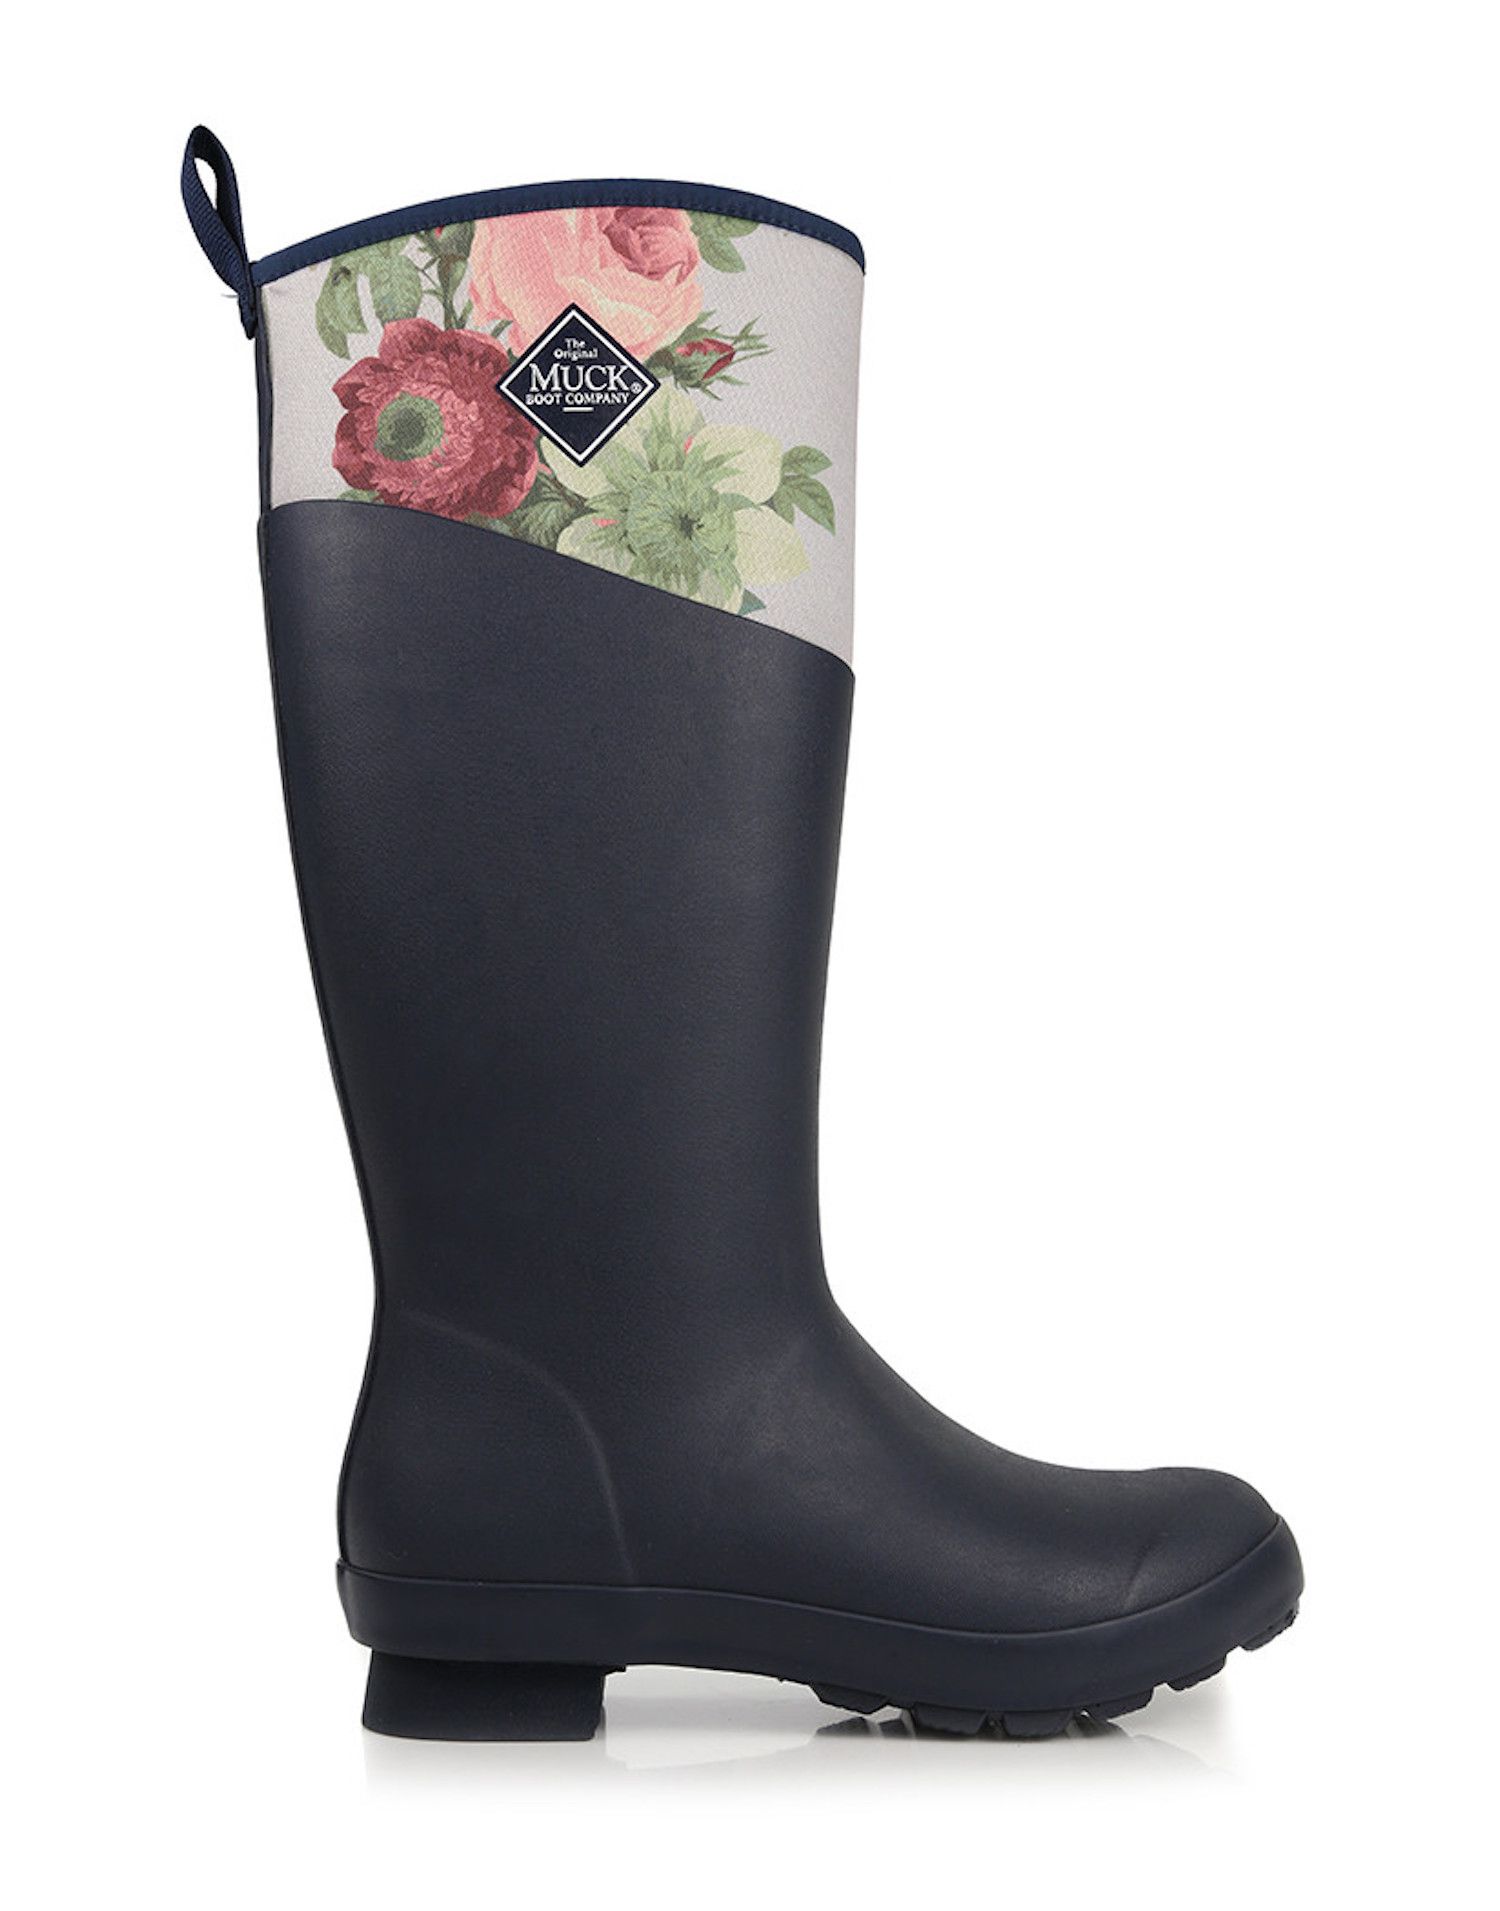 Festival Waterproof Fashion Womens Wellies Wellingtons Boots UK 3-8